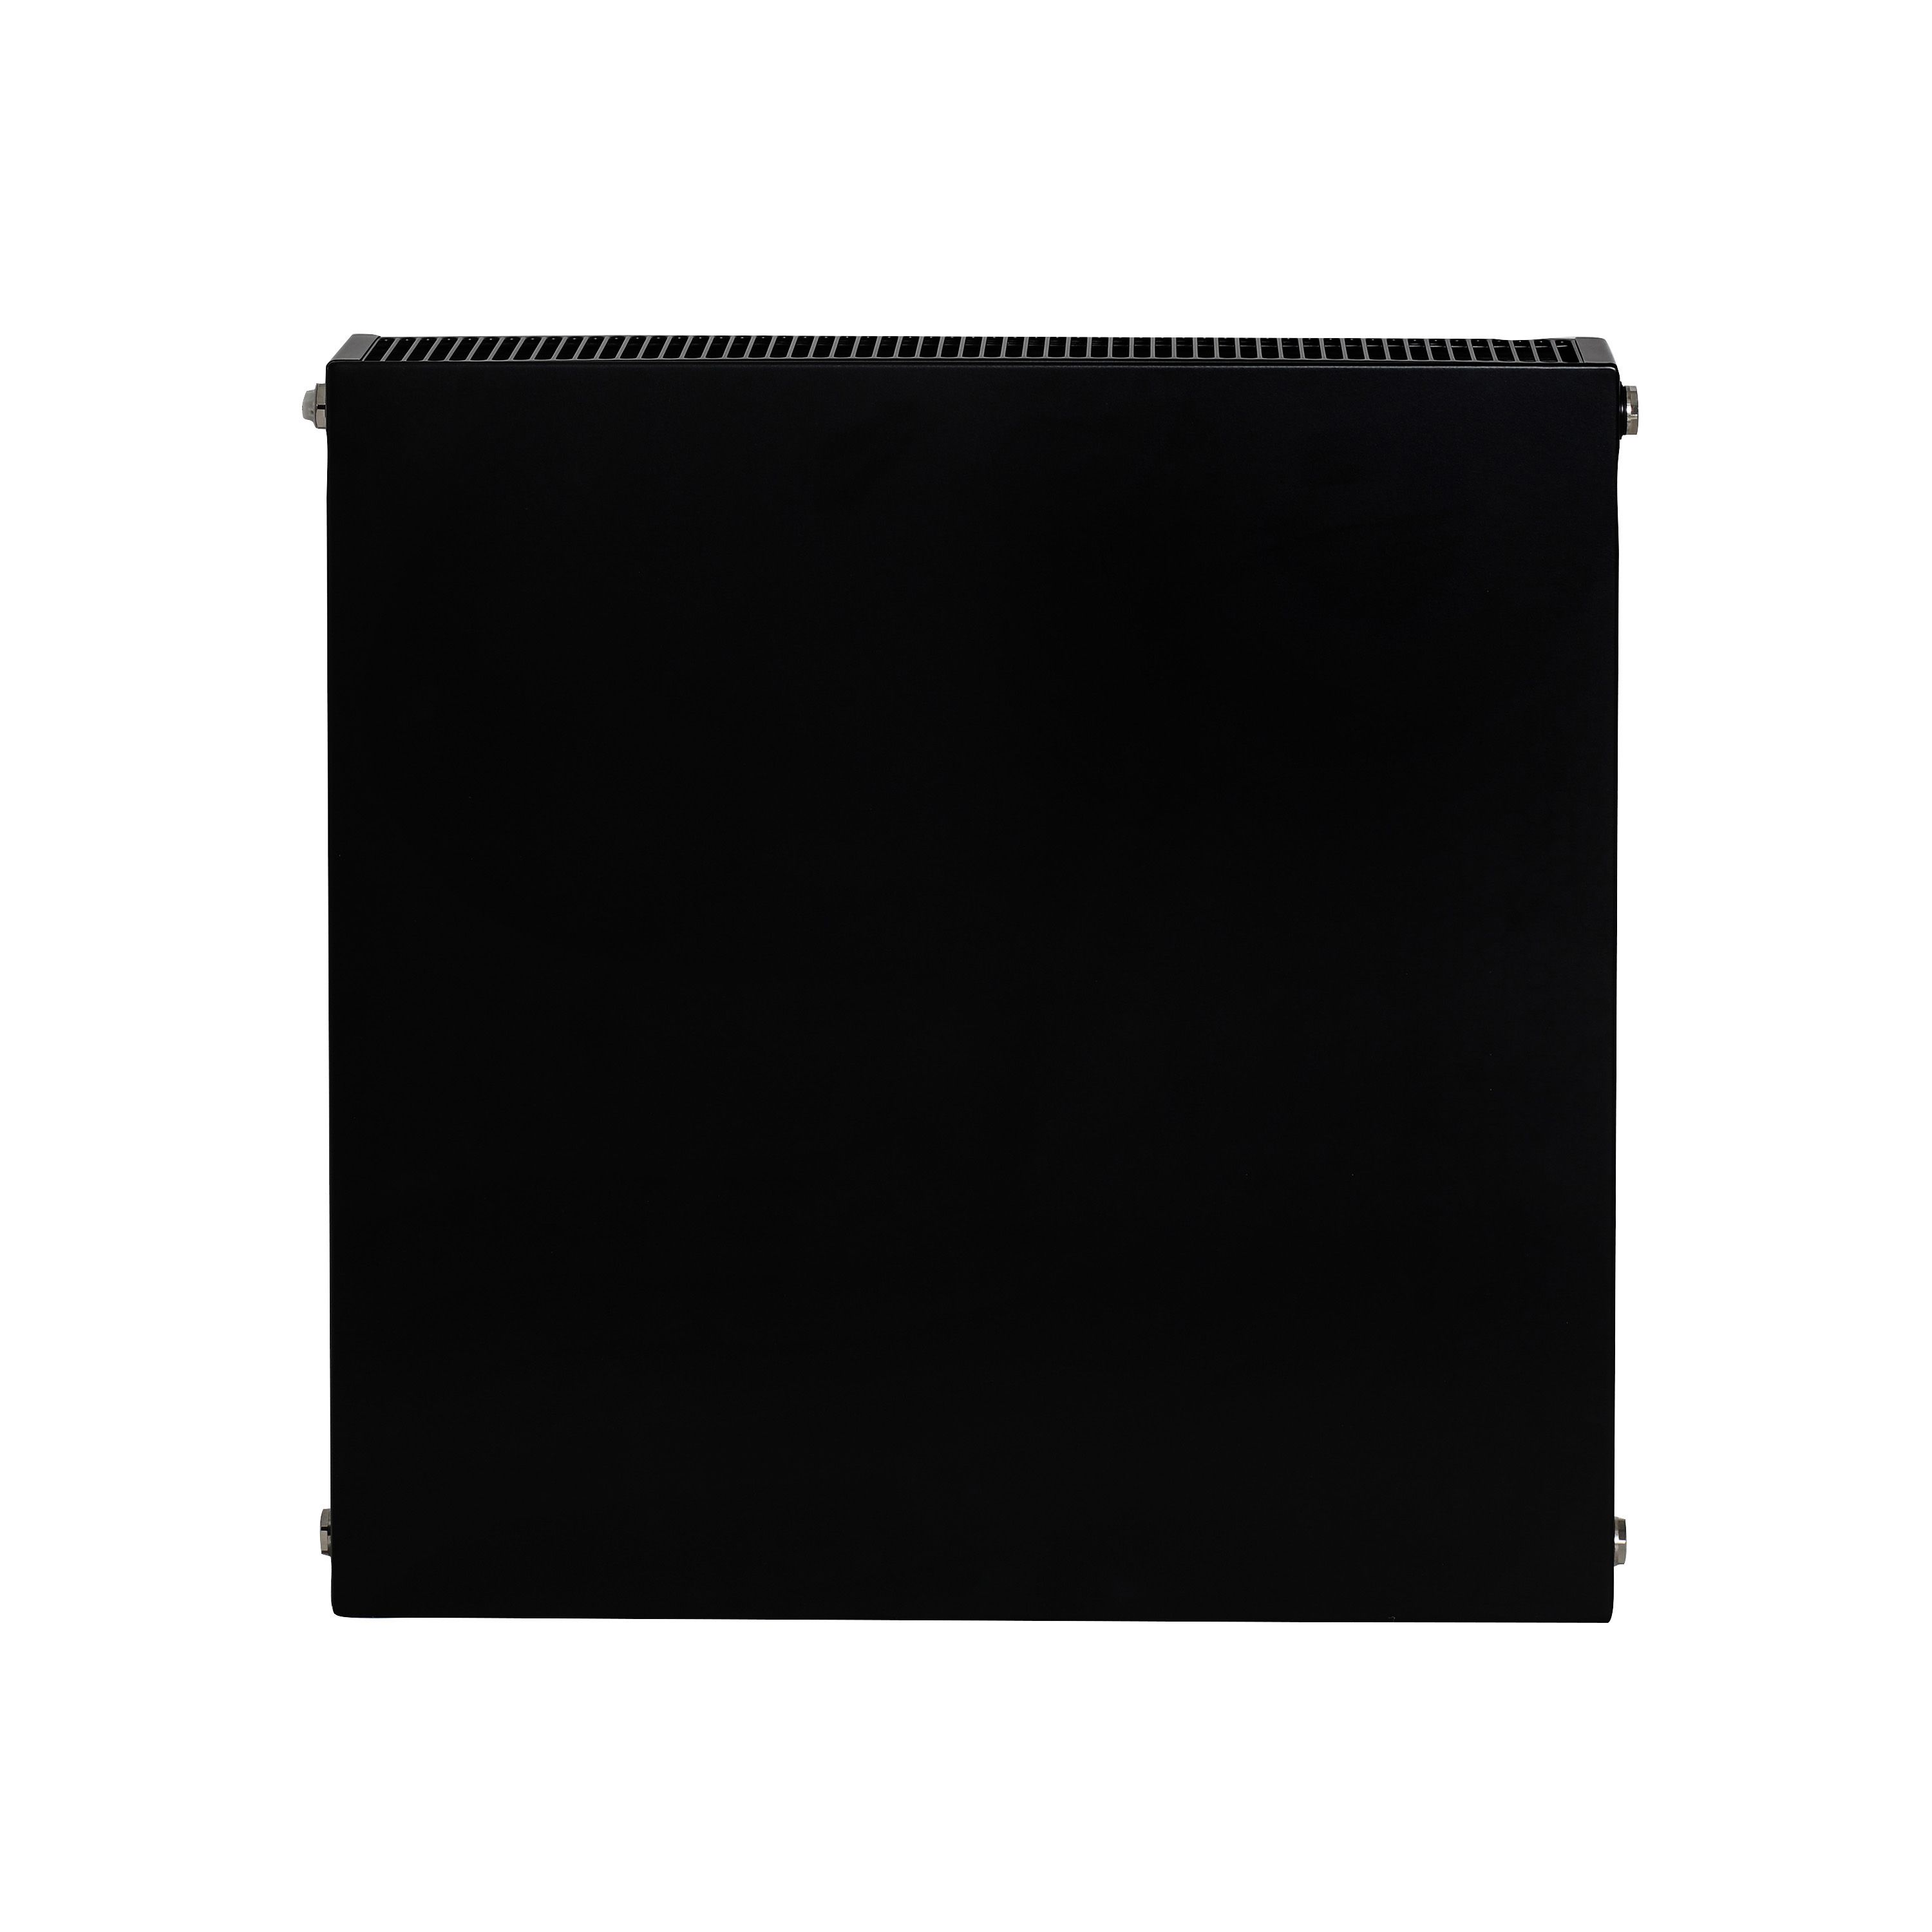 GoodHome Flat Black Type 22 Double Panel Radiator, (W)600mm x (H)600mm